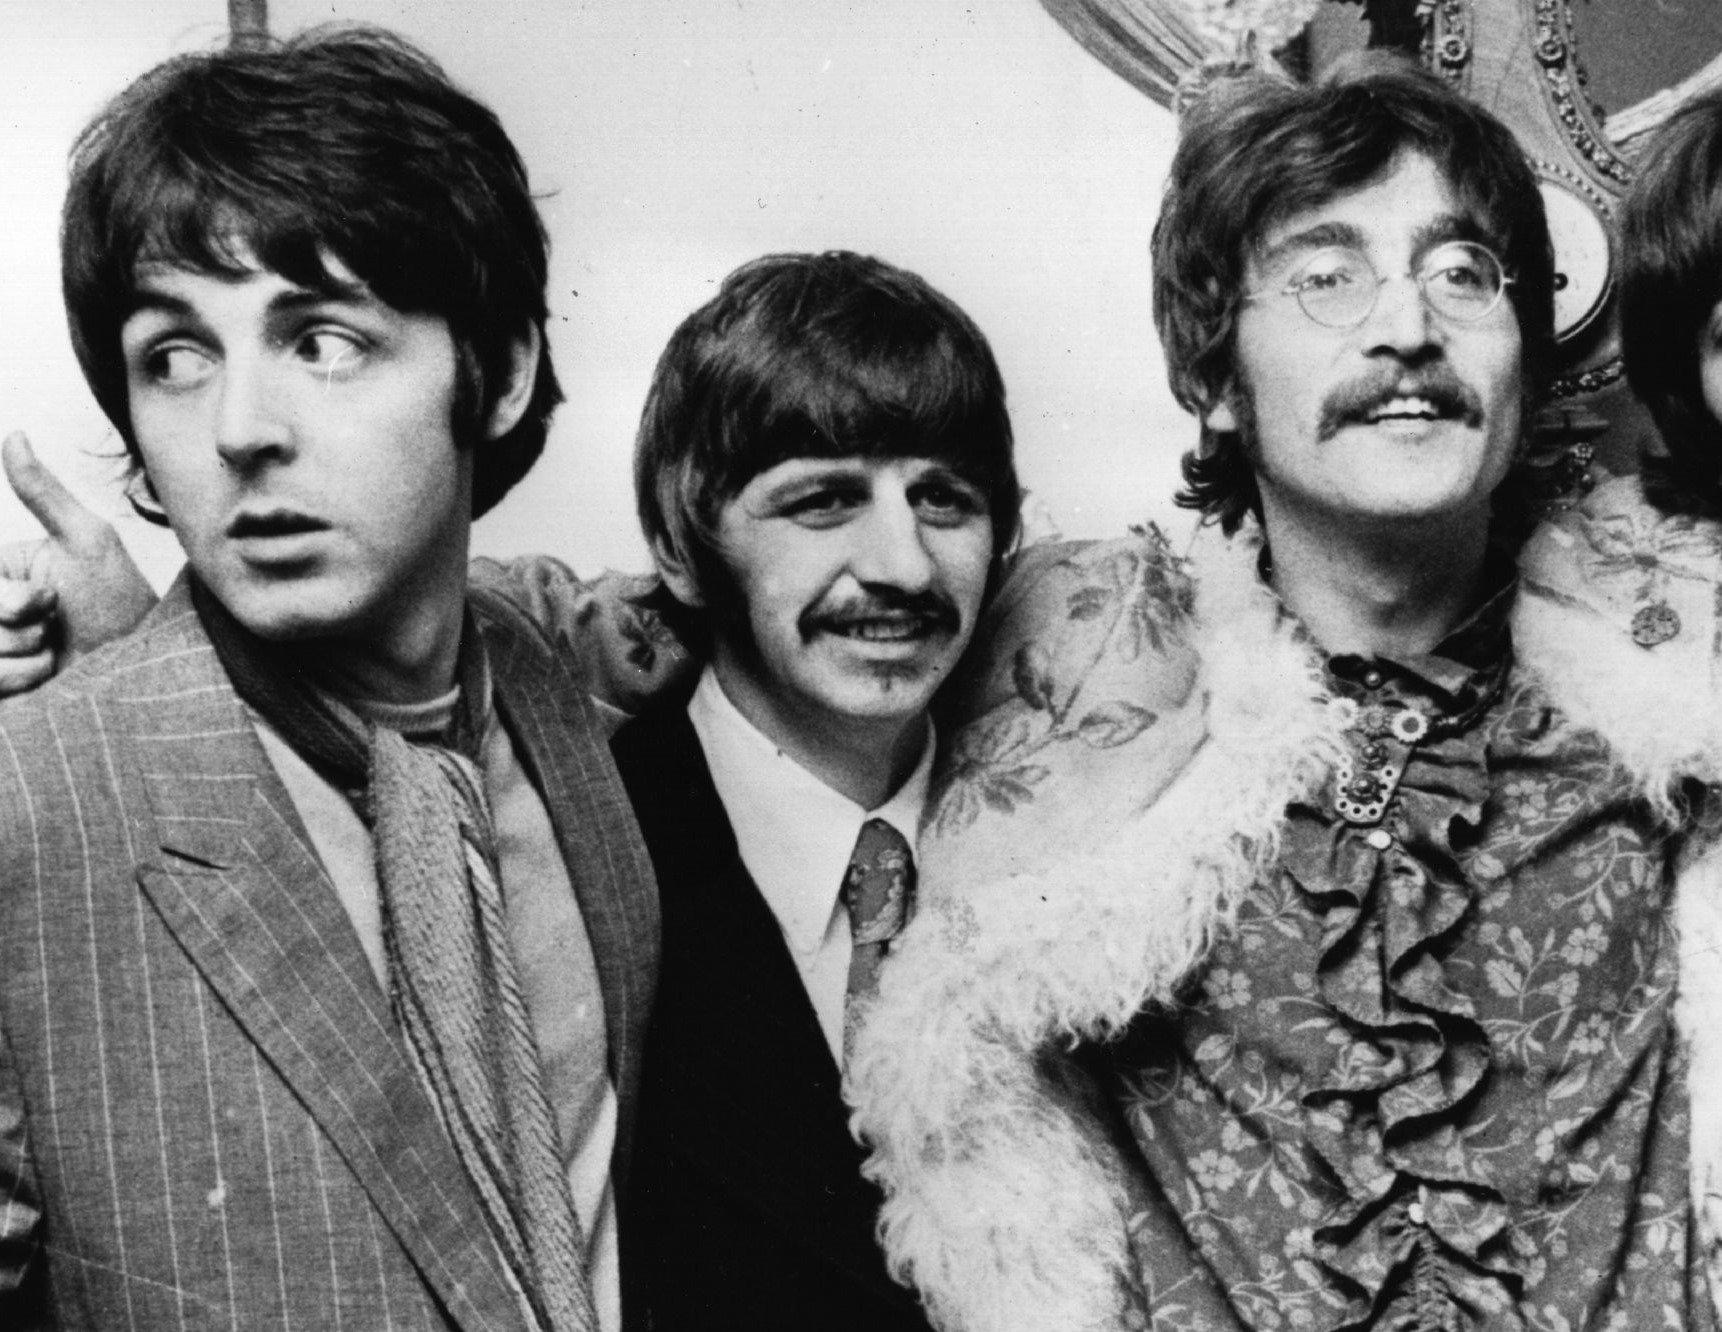 Paul McCartney, Ringo Starr, and John Lennon during The Beatles' "Hey Jude" era